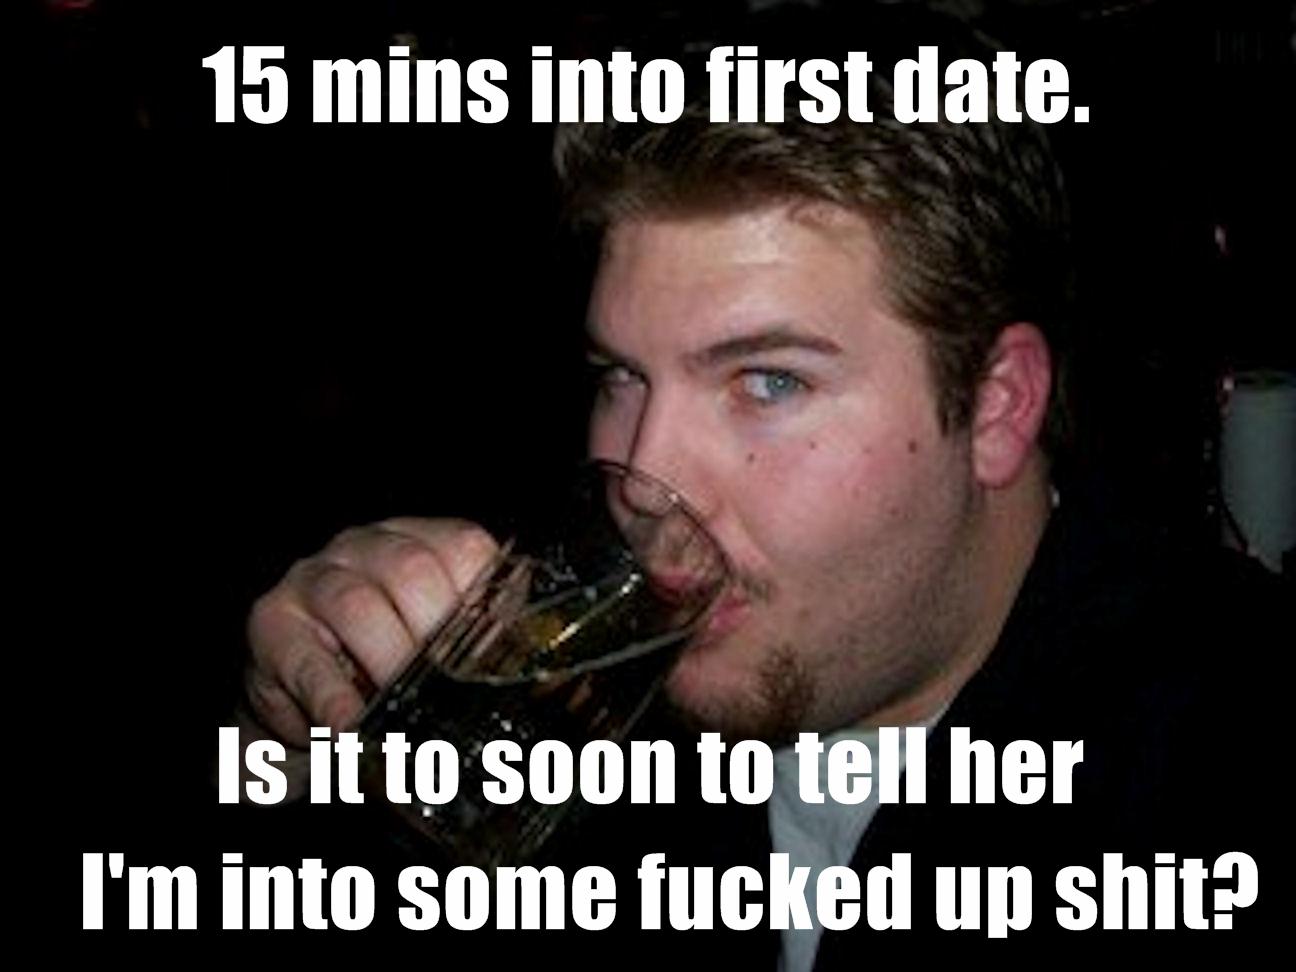 15 mins into 1st date meme